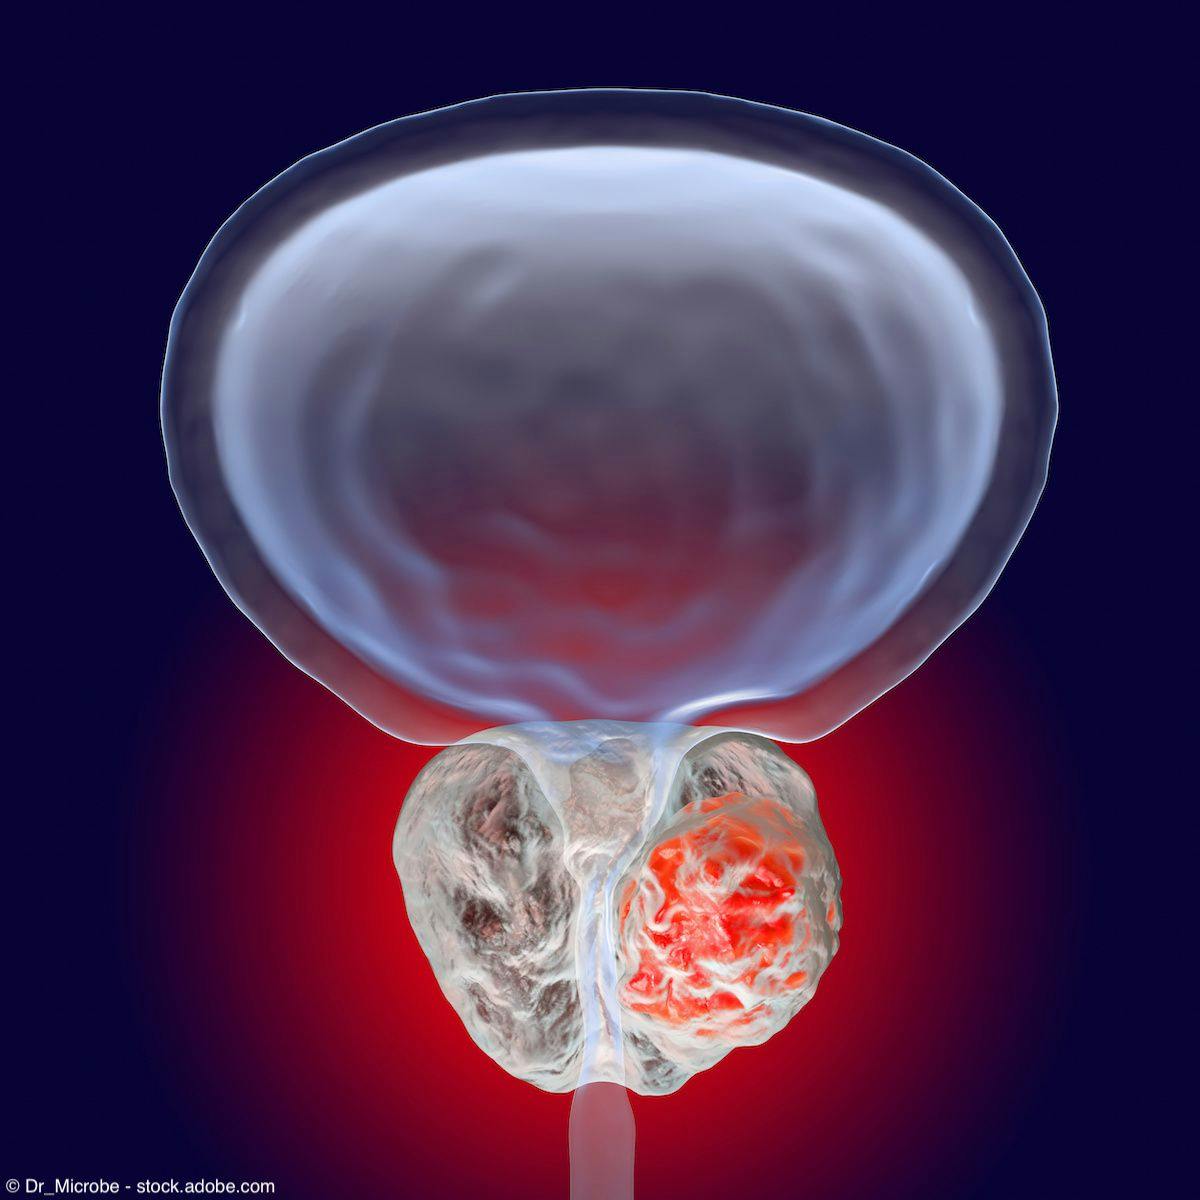 Prostate cancer, 3D illustration showing presence of tumor inside prostate gland which compresses urethra | Stock Credit: @ Dr_Microbe - stock.adobe.com 